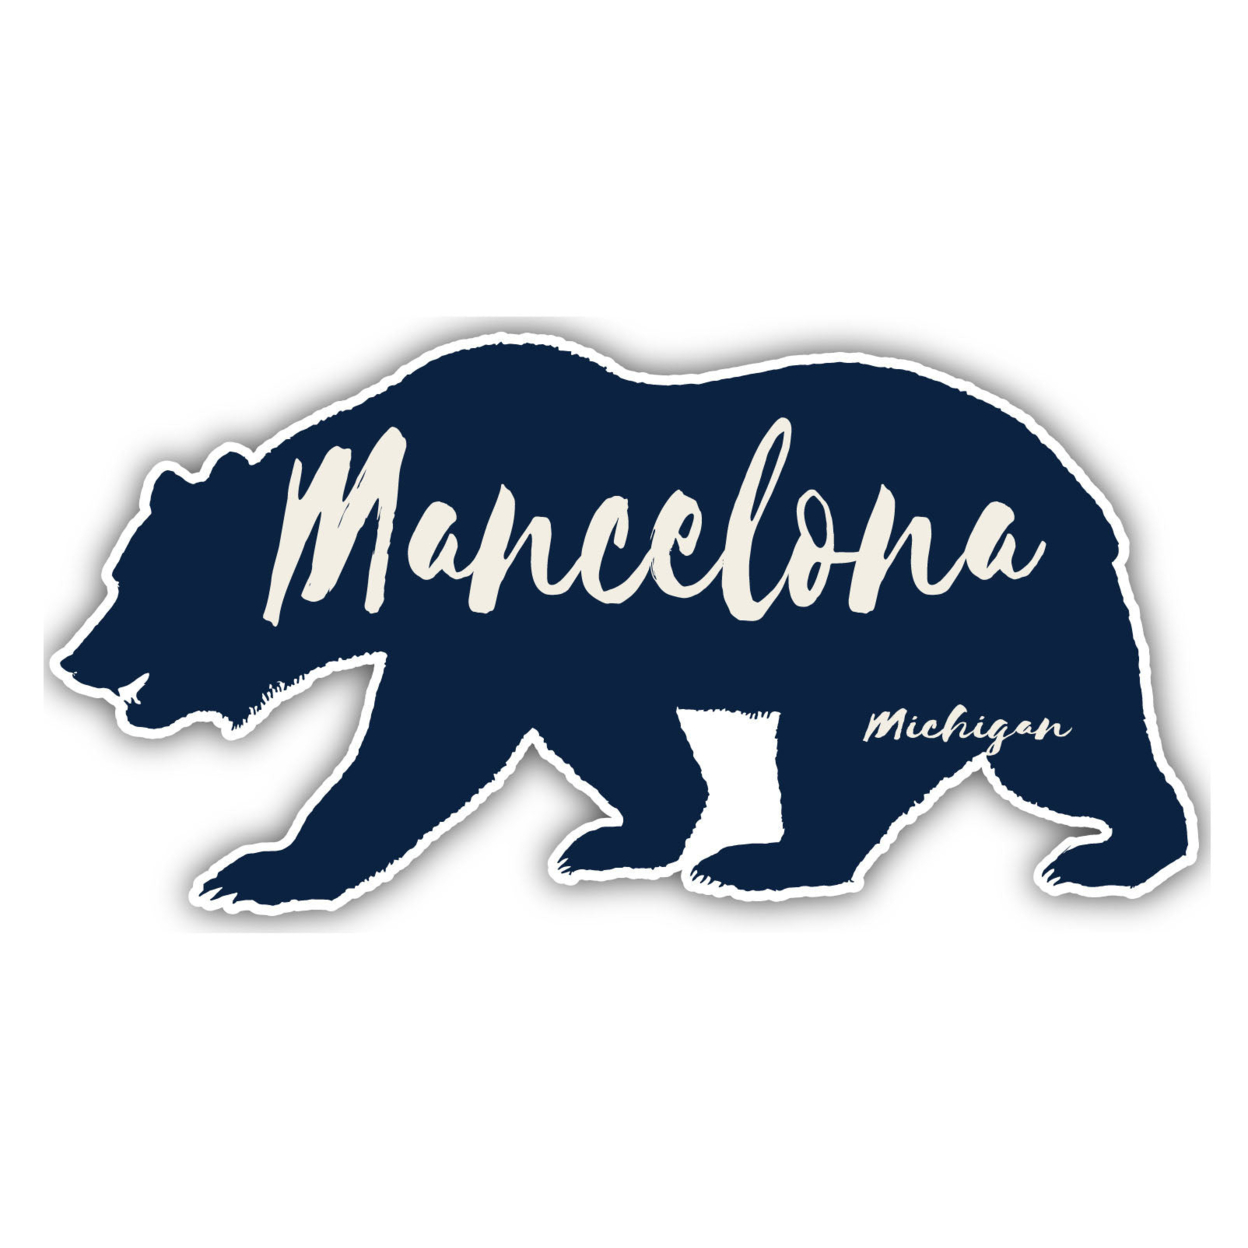 Mancelona Michigan Souvenir Decorative Stickers (Choose Theme And Size) - 4-Inch, Tent